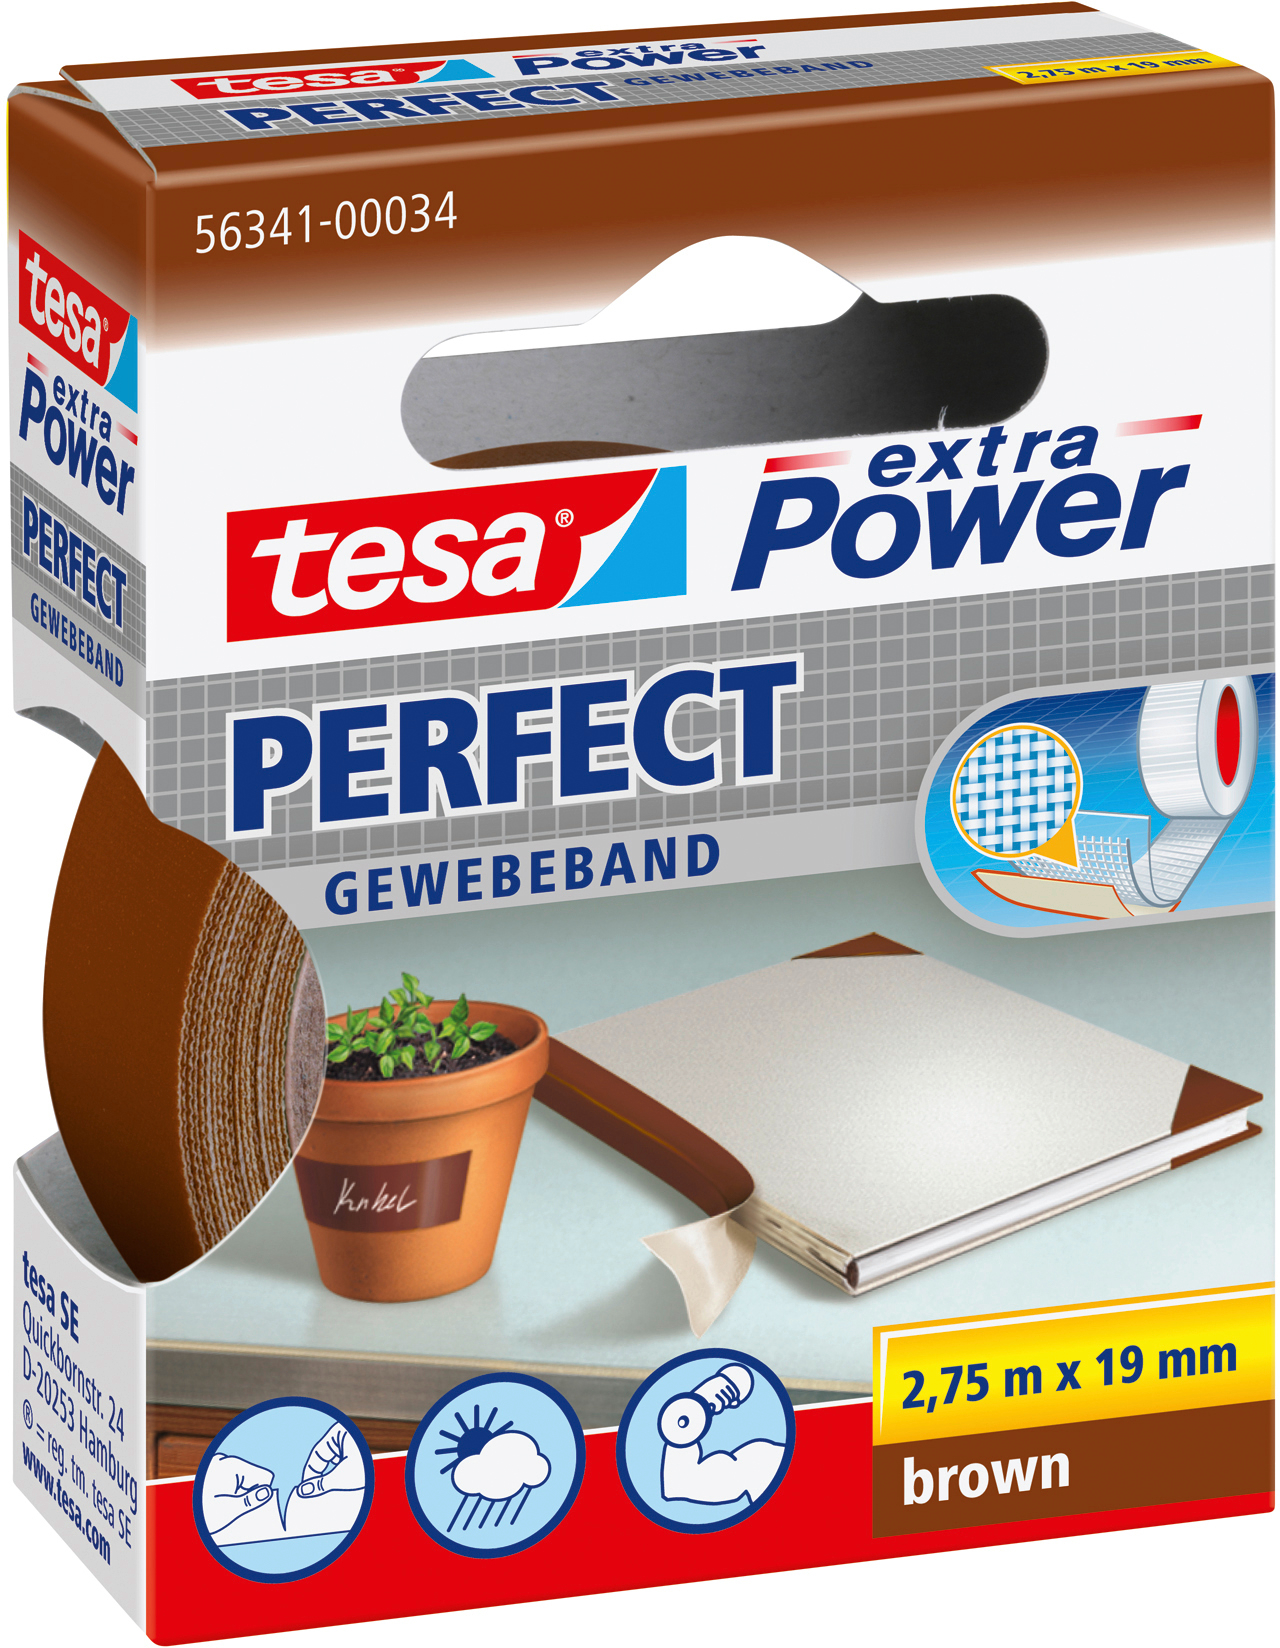 TESA Gewebeband Extra Power Perfect braun 19mm x 2,75m<br>